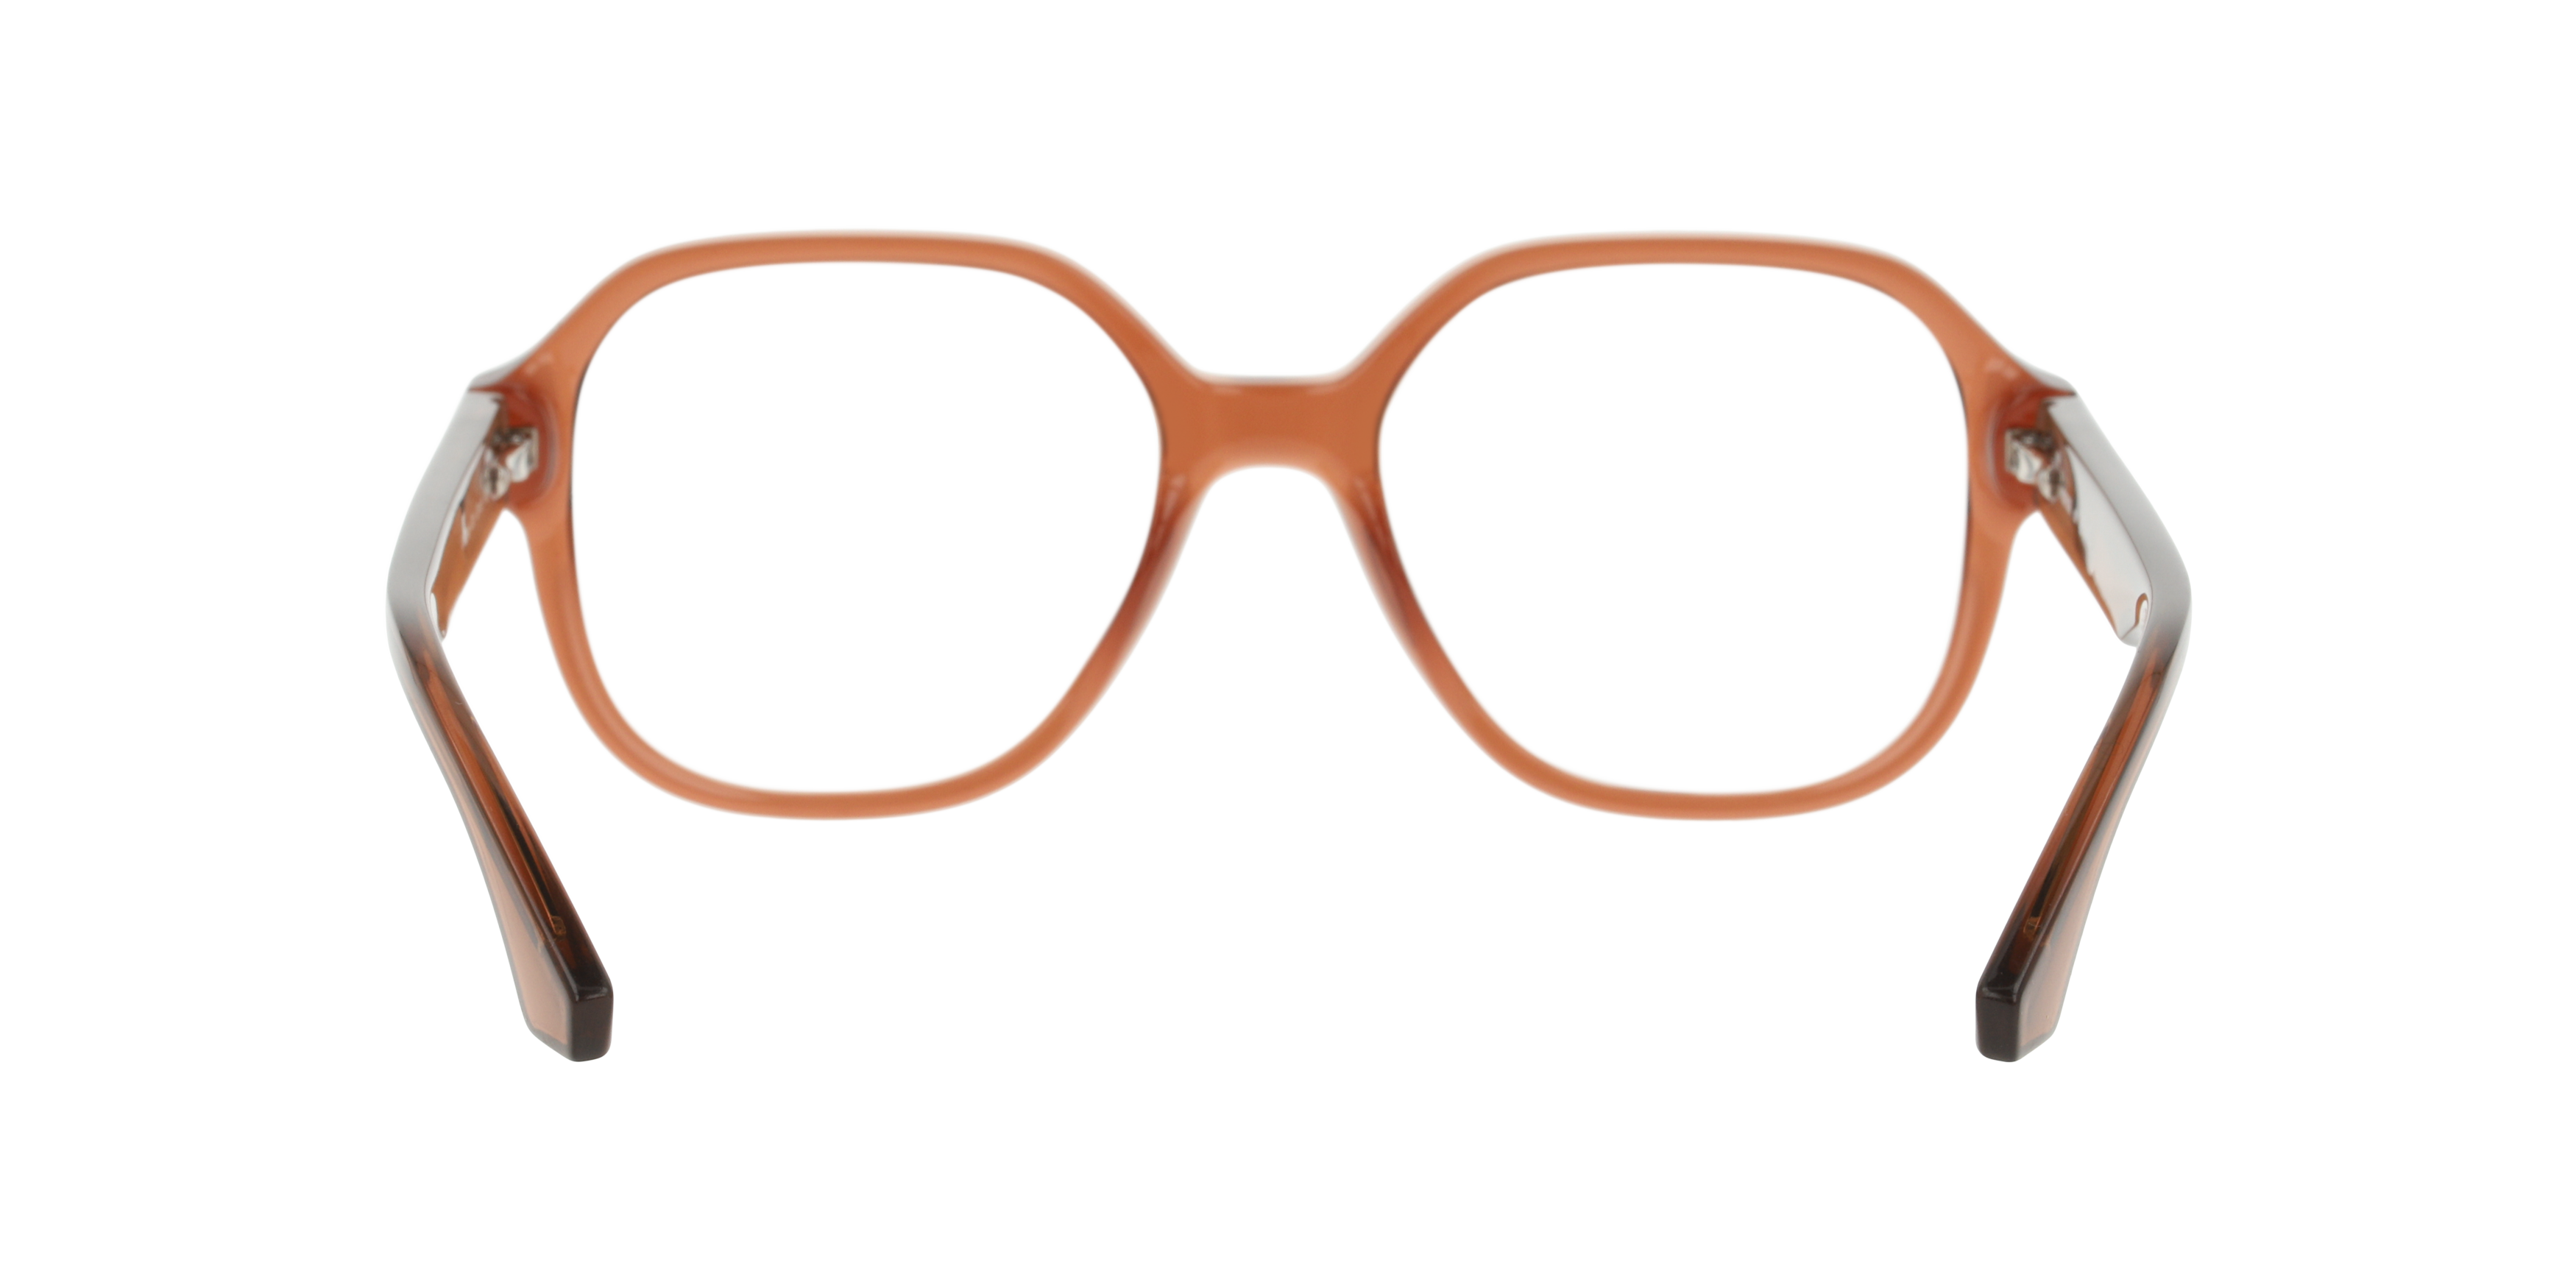 Detail02 Unofficial UO3045 Glasses Transparent / Transparent, Brown